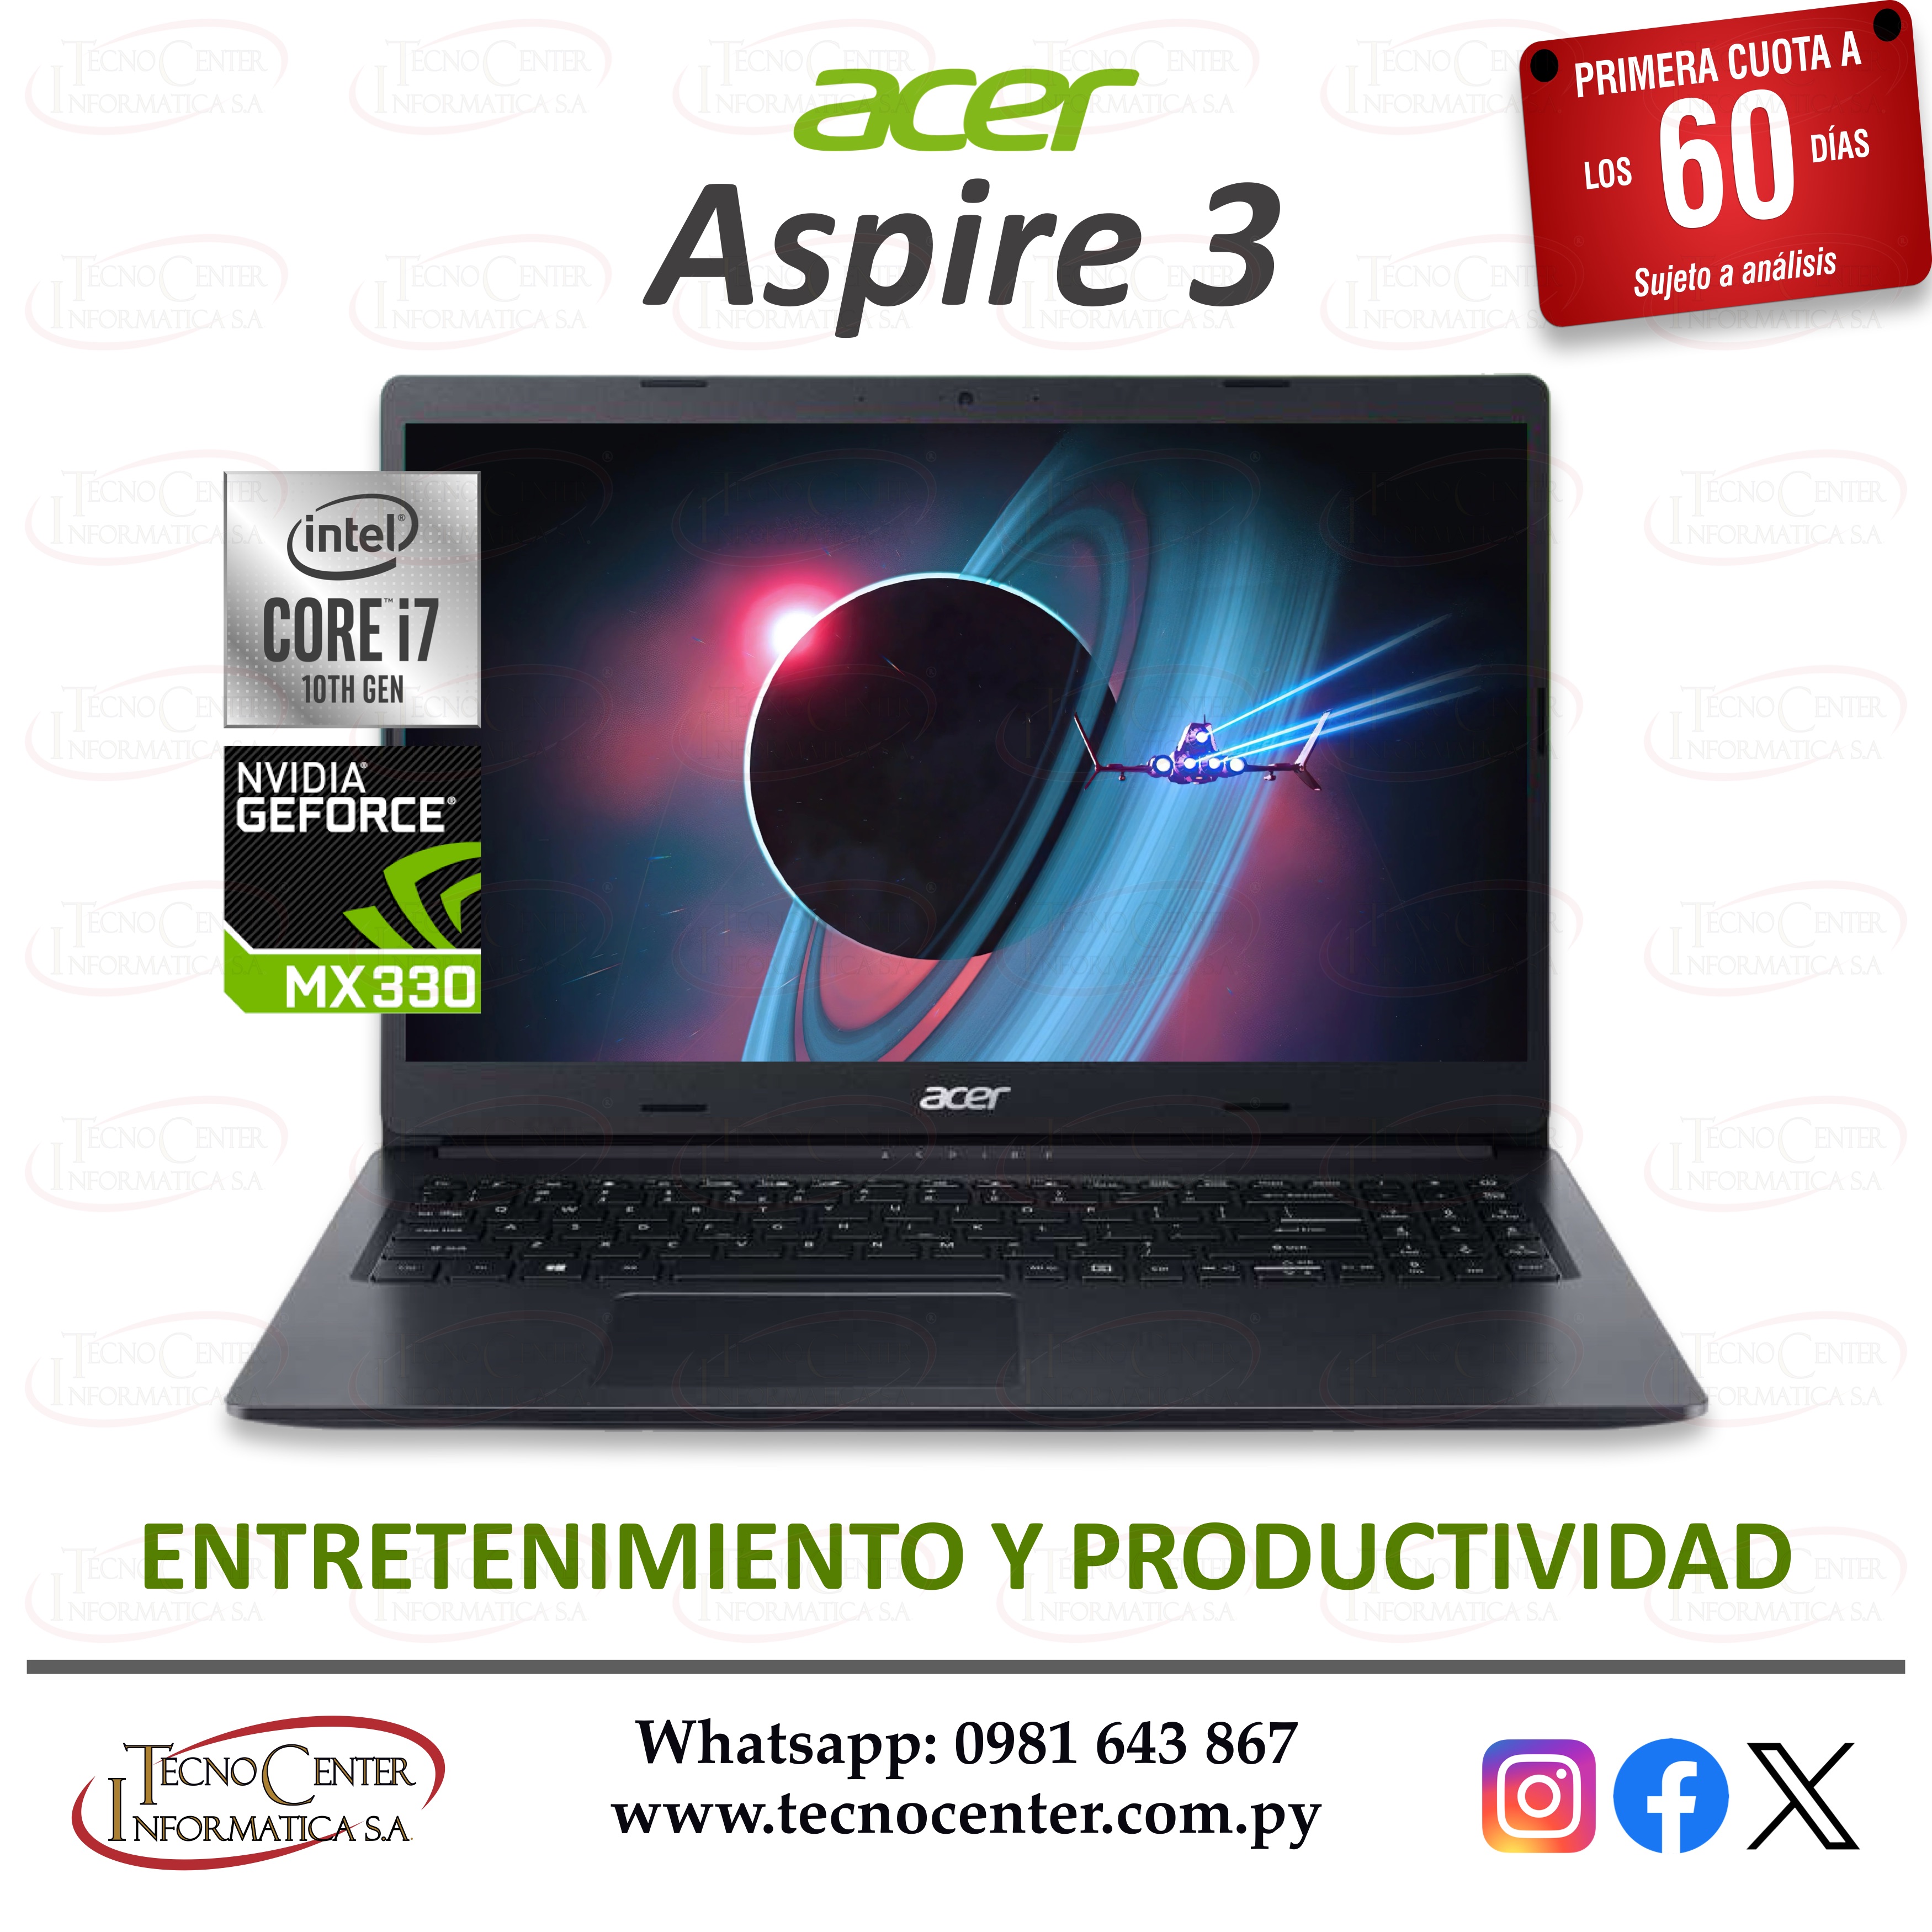 Notebook Acer Aspire 3 Intel Core i7 MX330